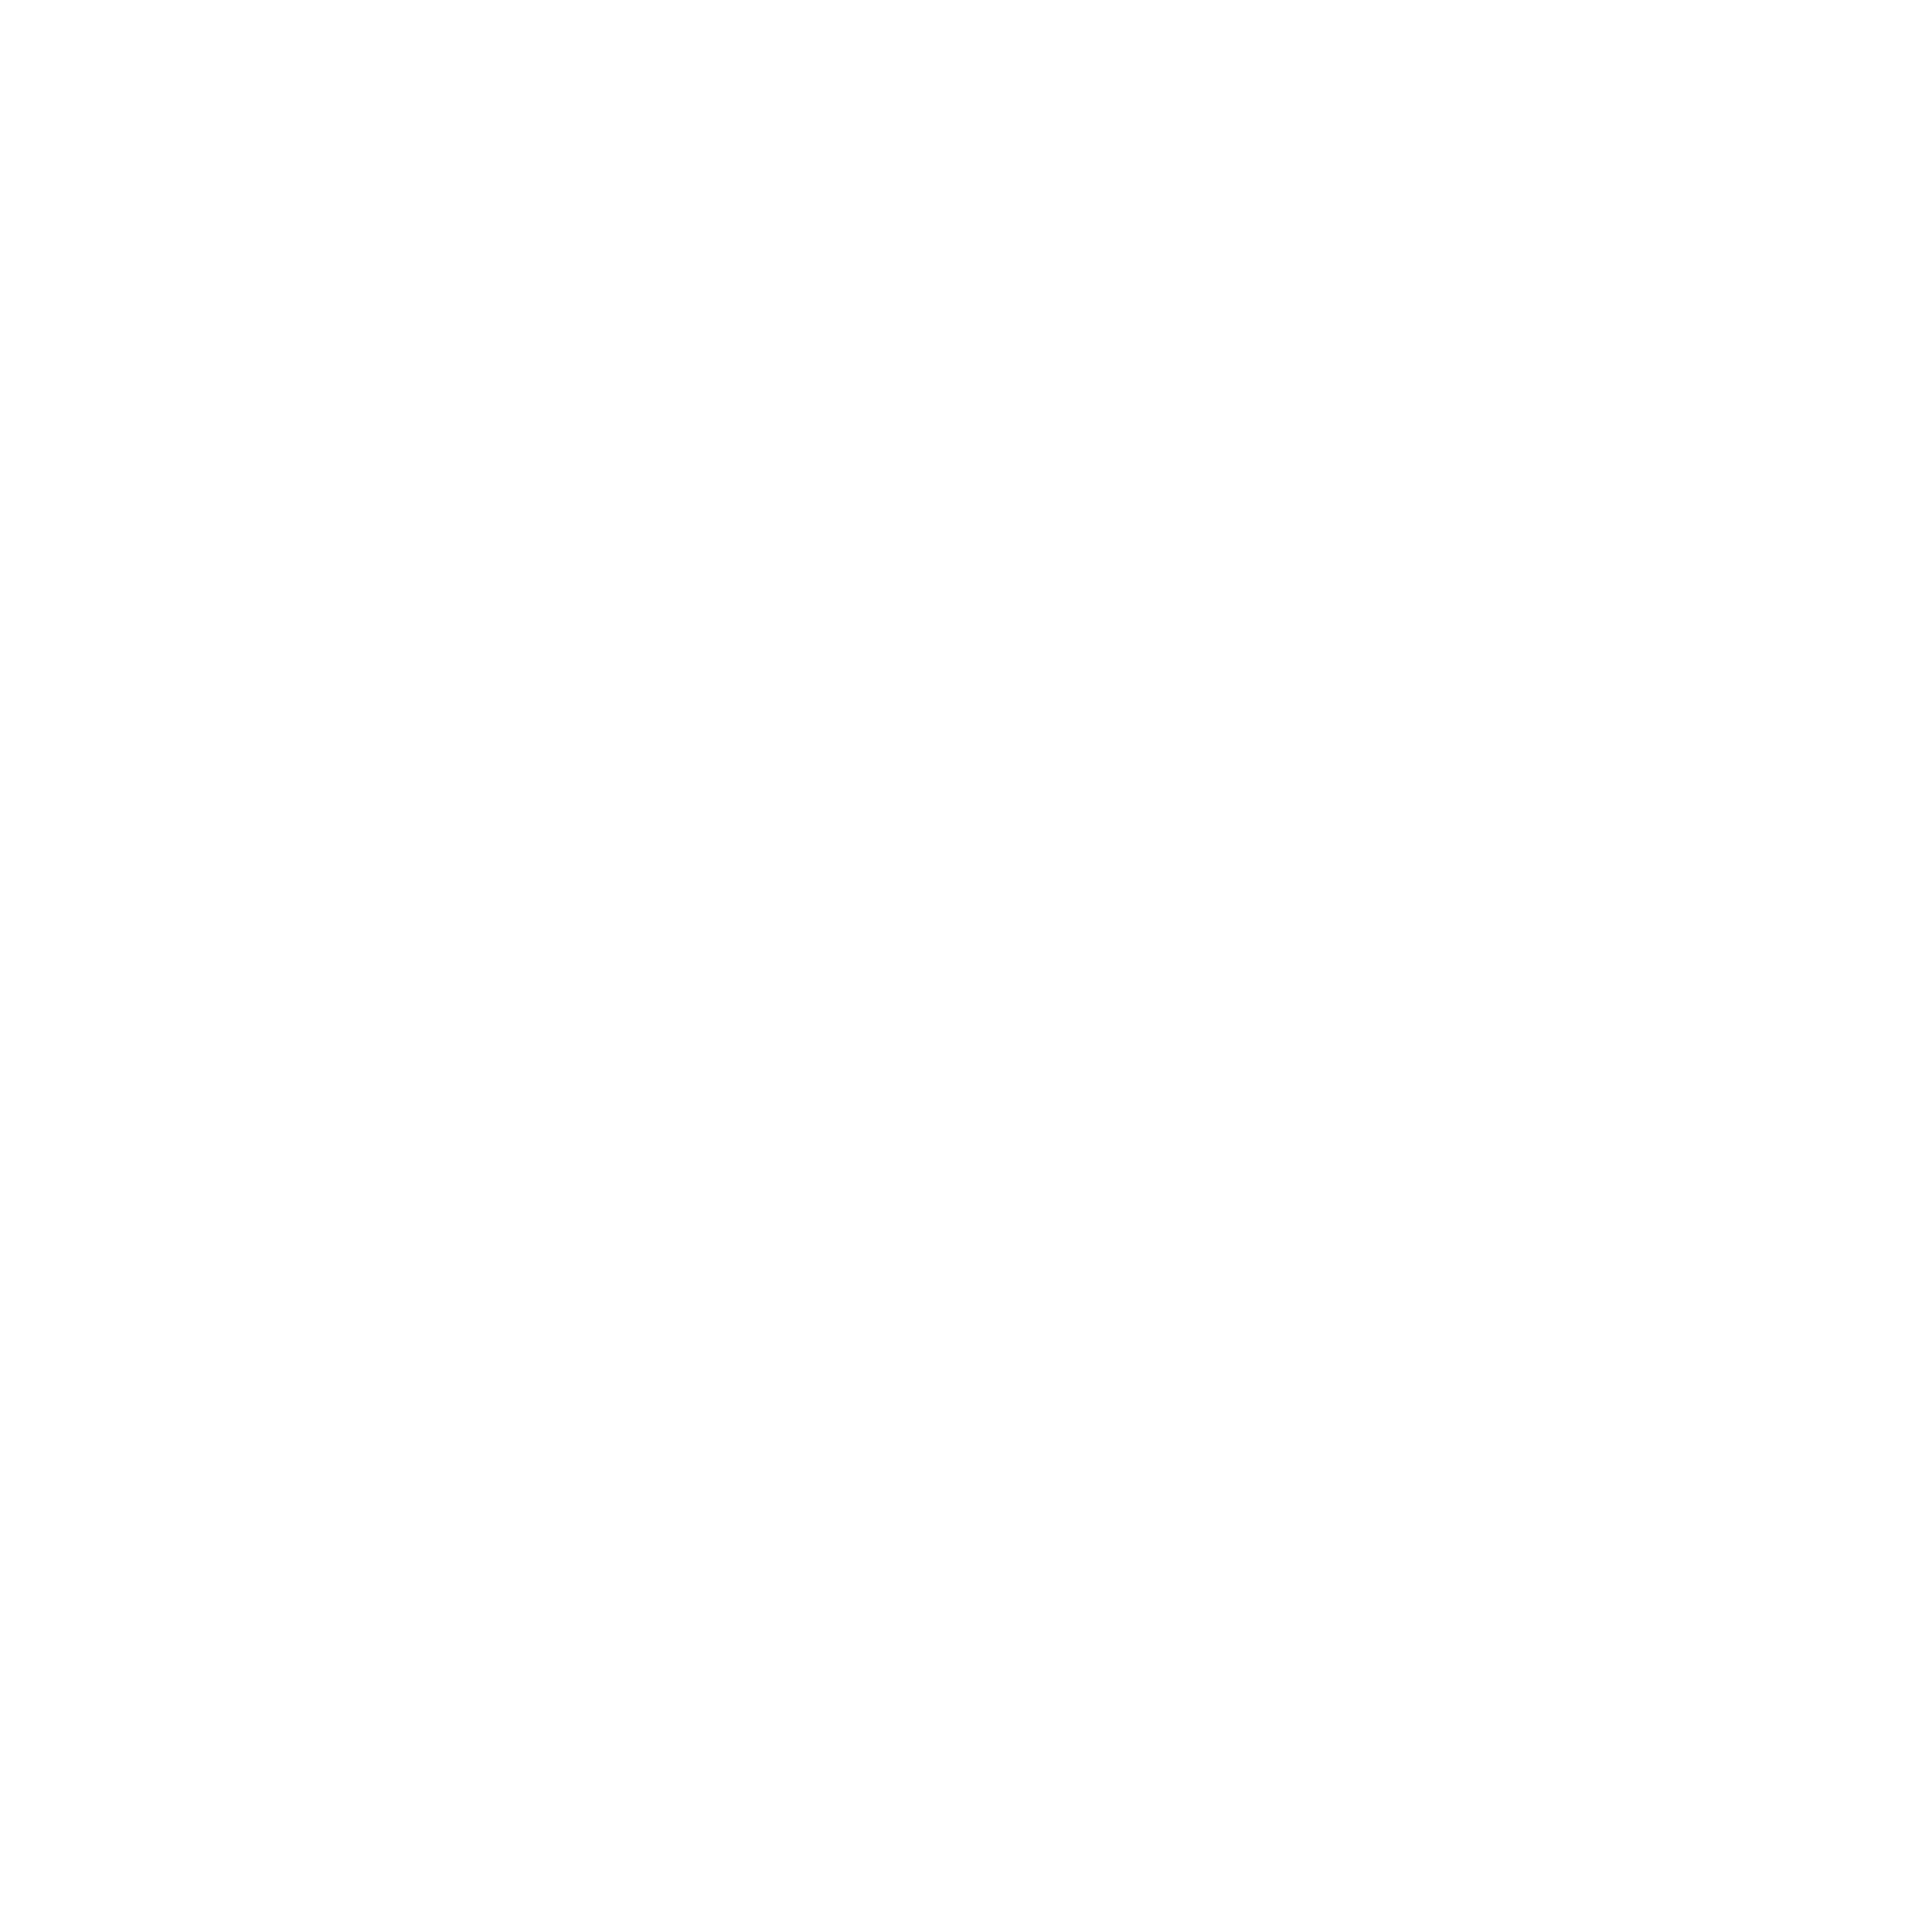 polka-dot-wedding-white.png